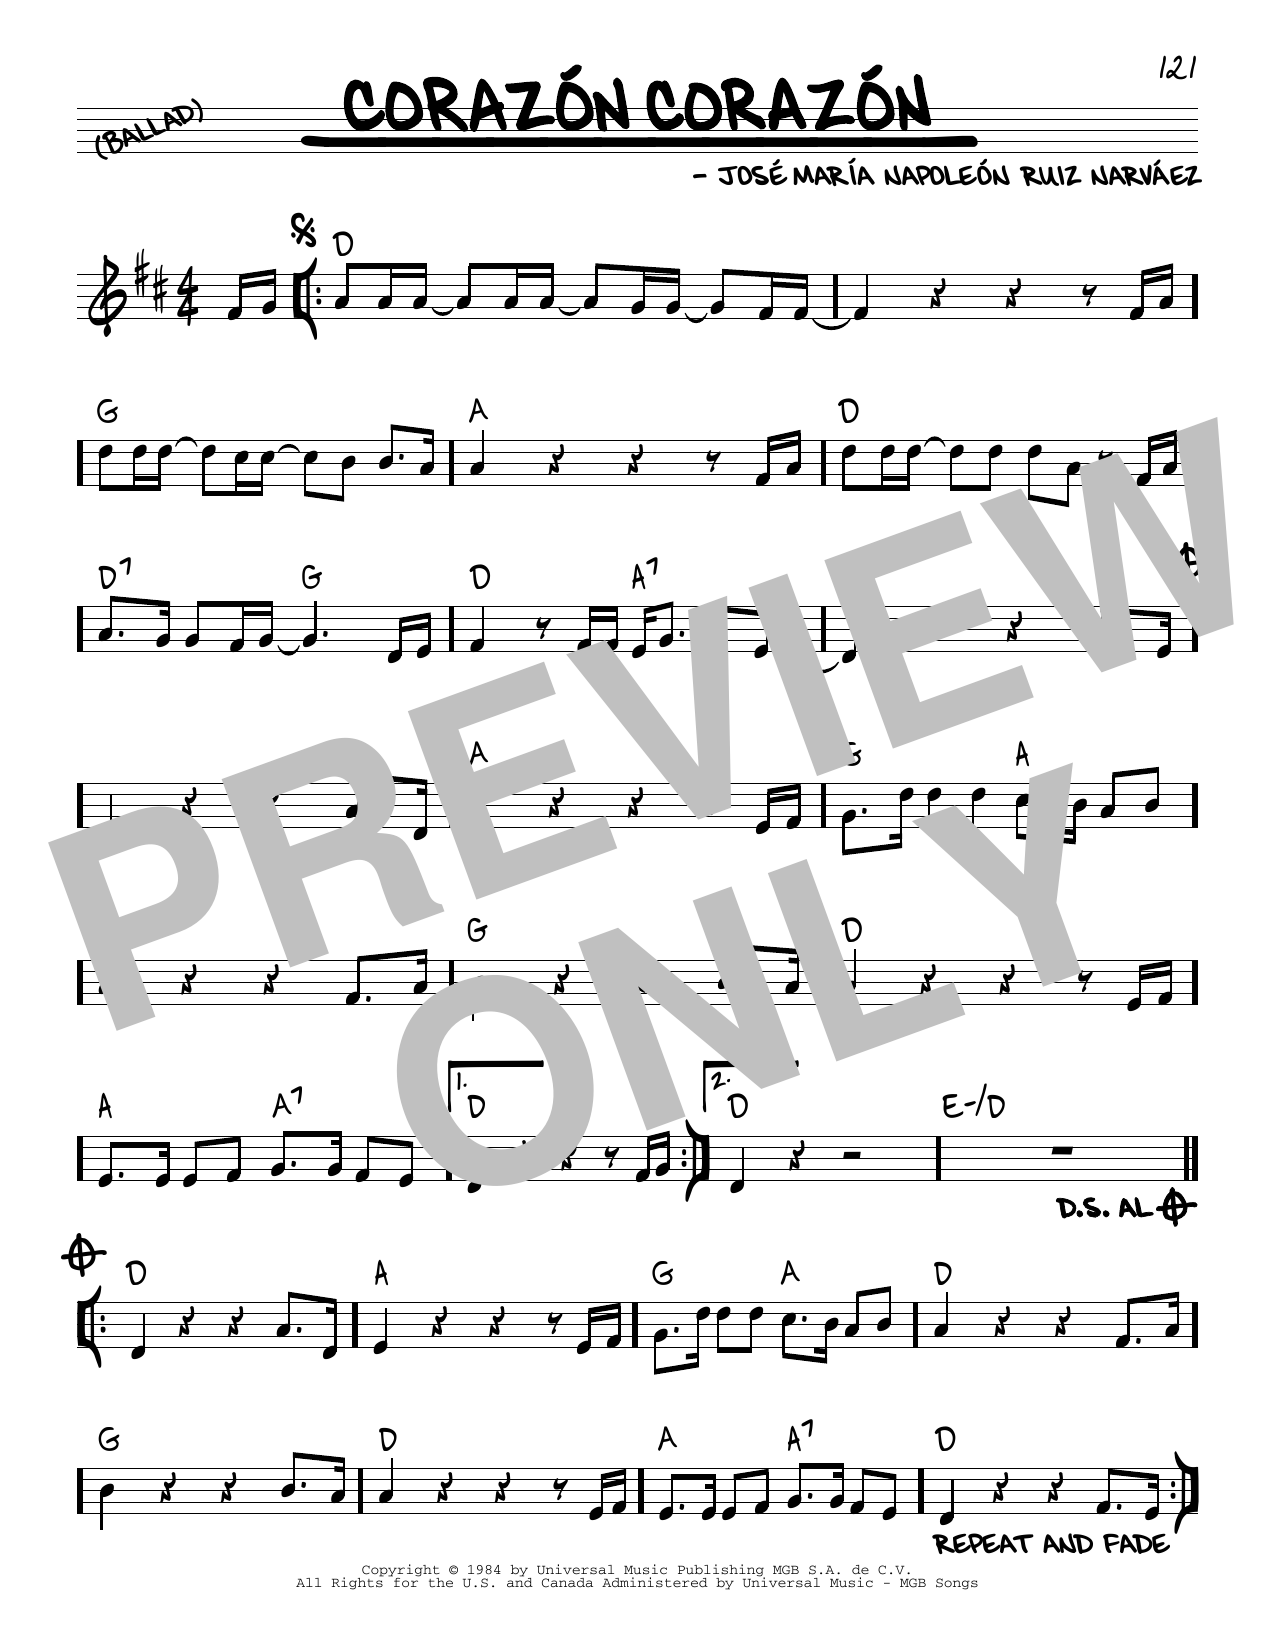 Jose Maria Napoleon Ruiz Narva Corazon Corazon sheet music notes and chords arranged for Real Book – Melody & Chords